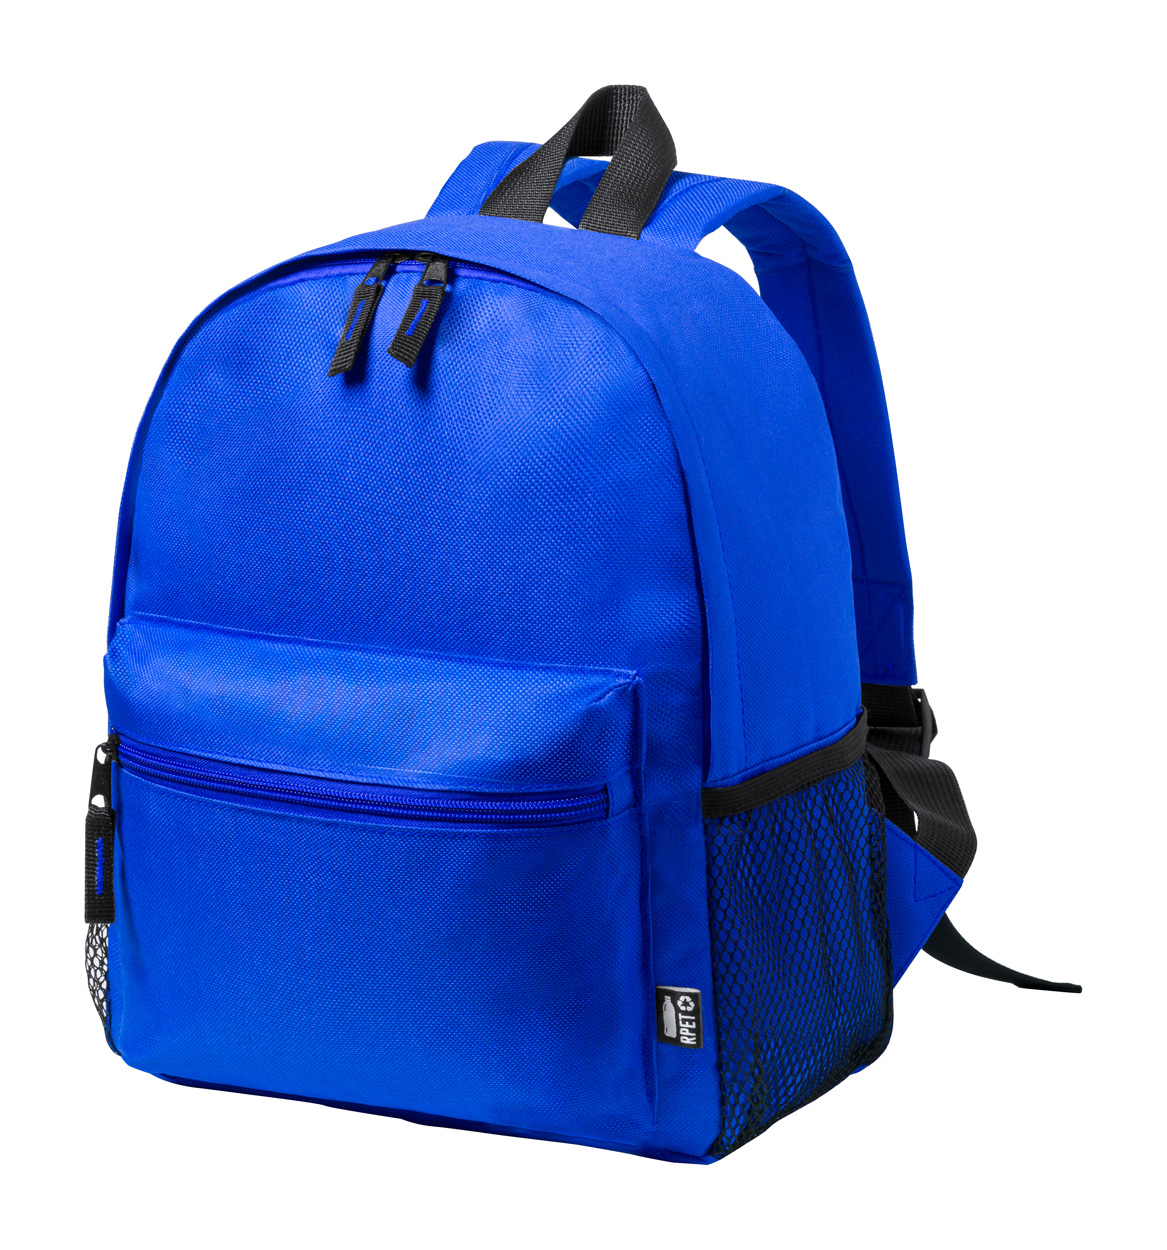 Maggie RPET batoh pro děti - modrá